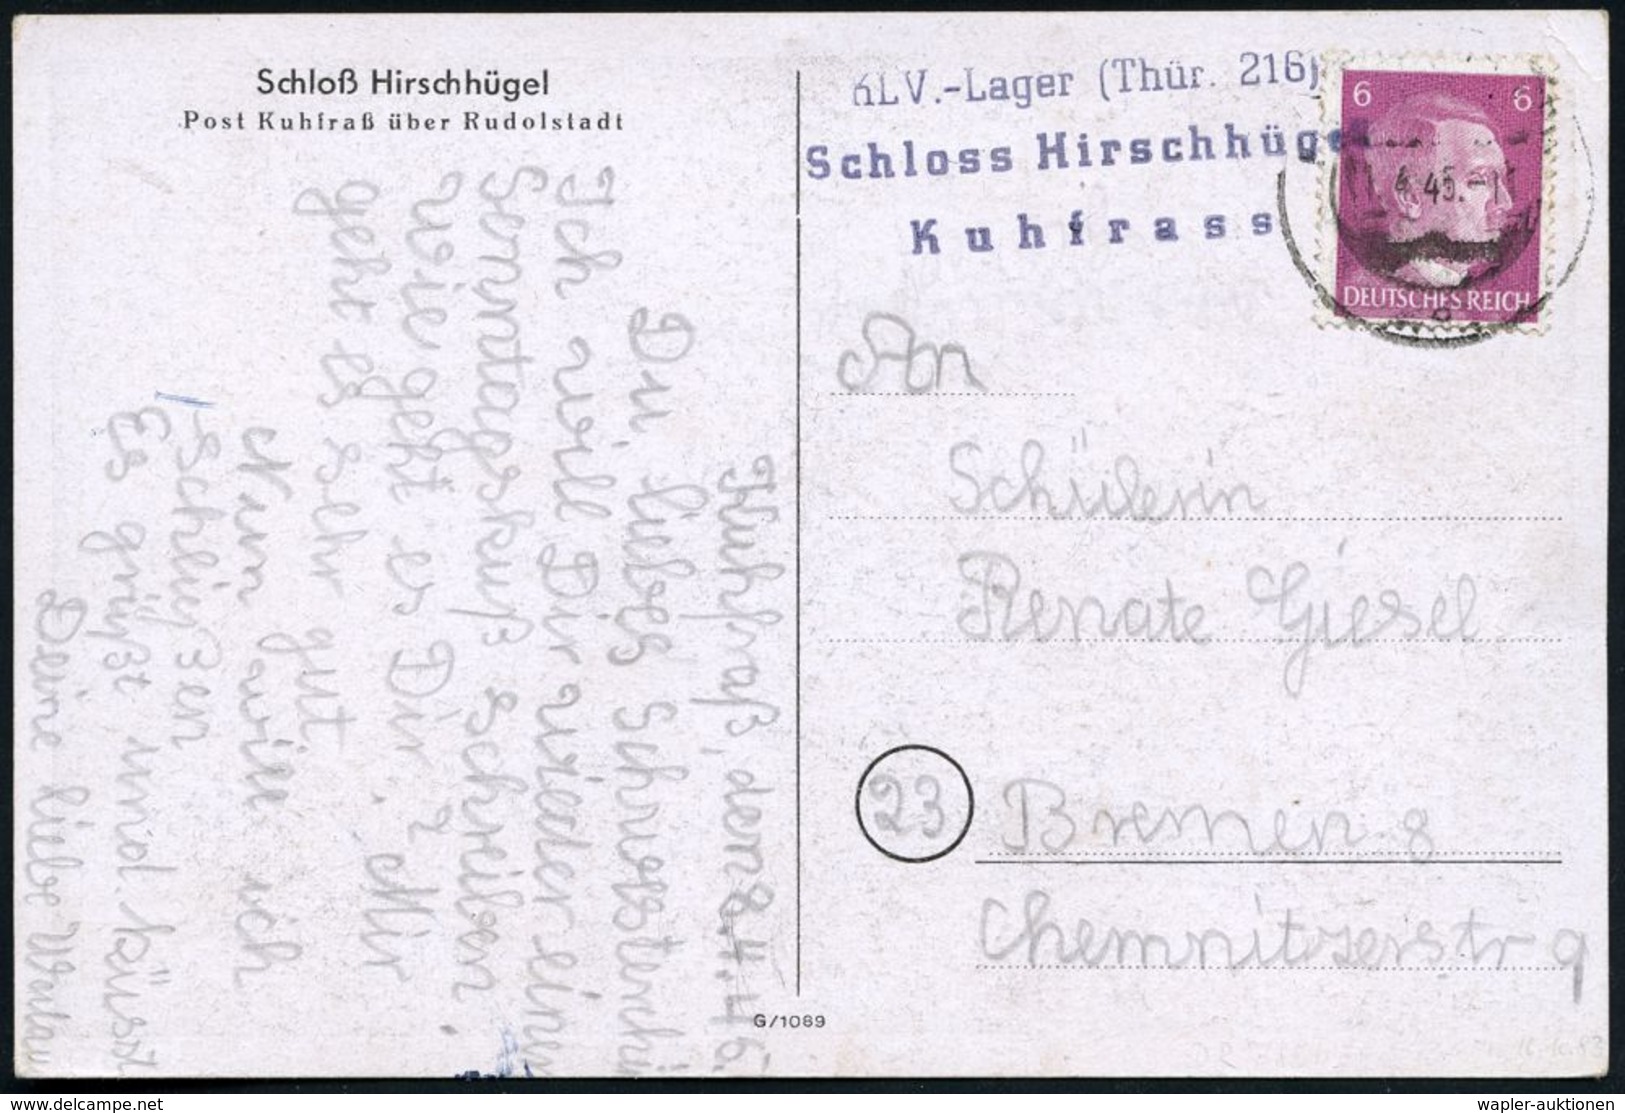 KINDERLANDVERSCHICKUNG (KLV) / KLV-LAGER : Kuhfrass 1945 (11.4.) Viol. 3L: K L V. - Lager (Thür. 216)/ Schloss Hirschhüg - WW2